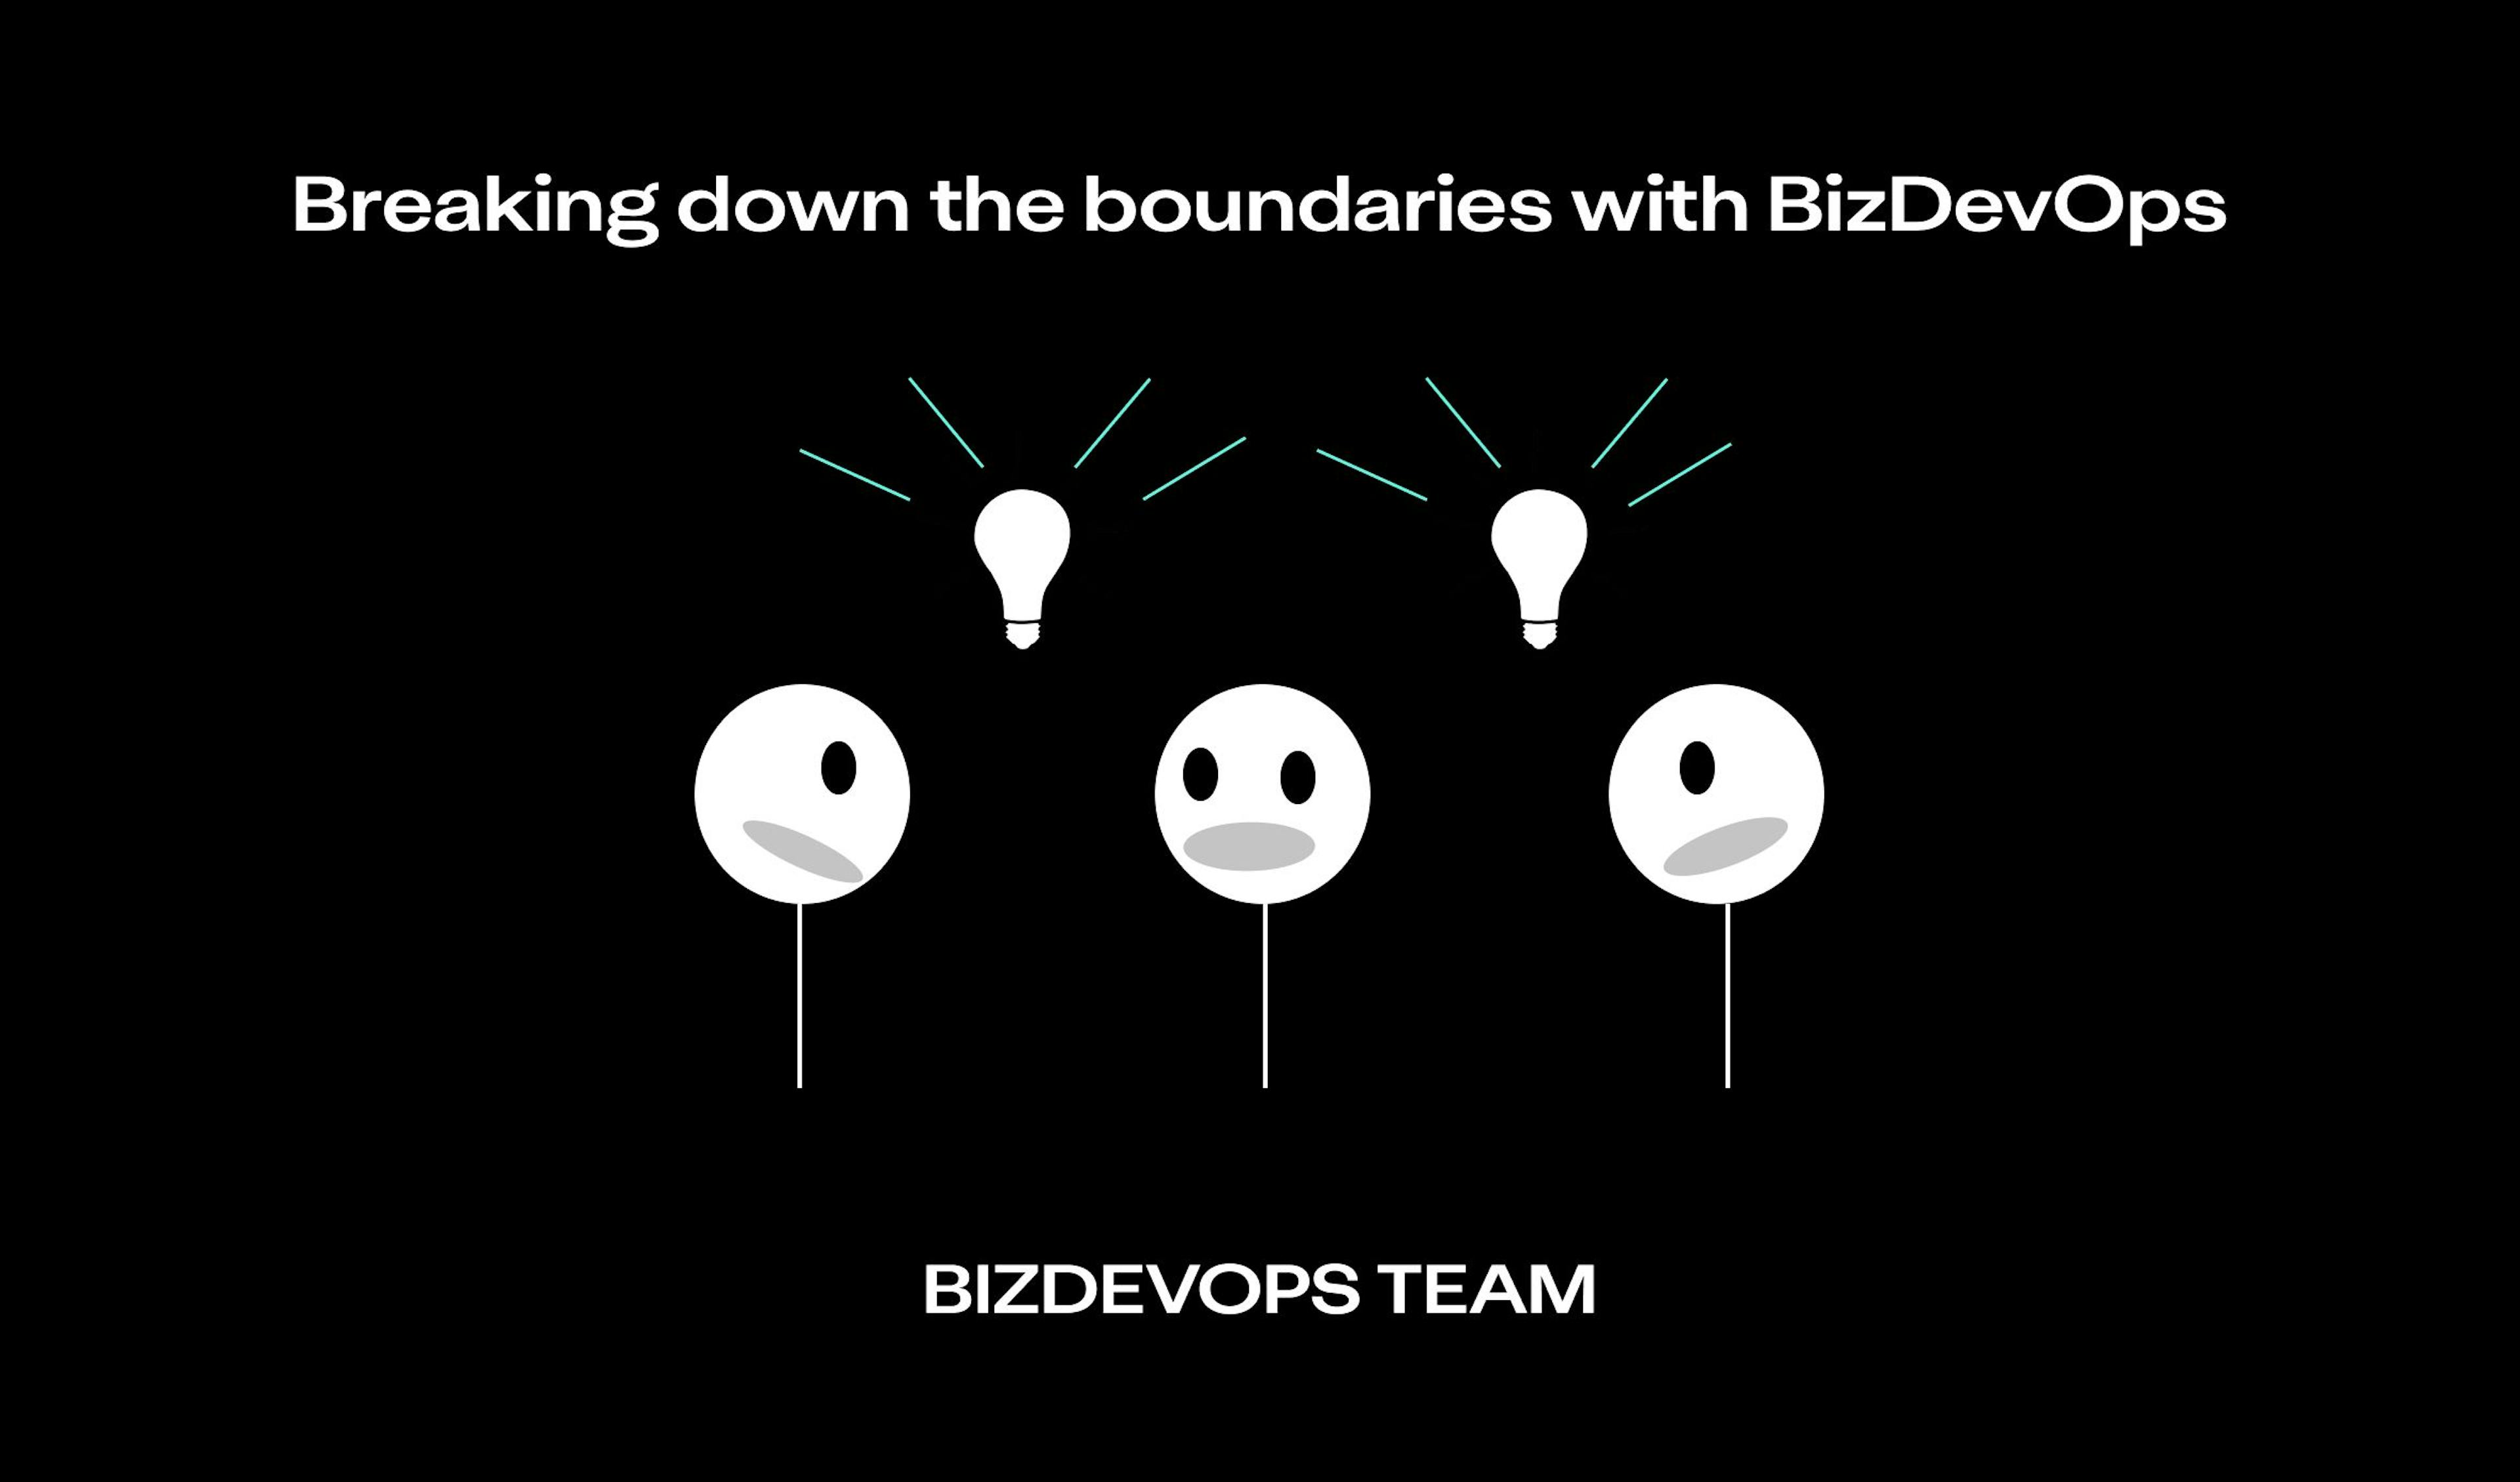 featured image - BizDevOps (DevOps 2.0) Is the New Iteration of DevOps